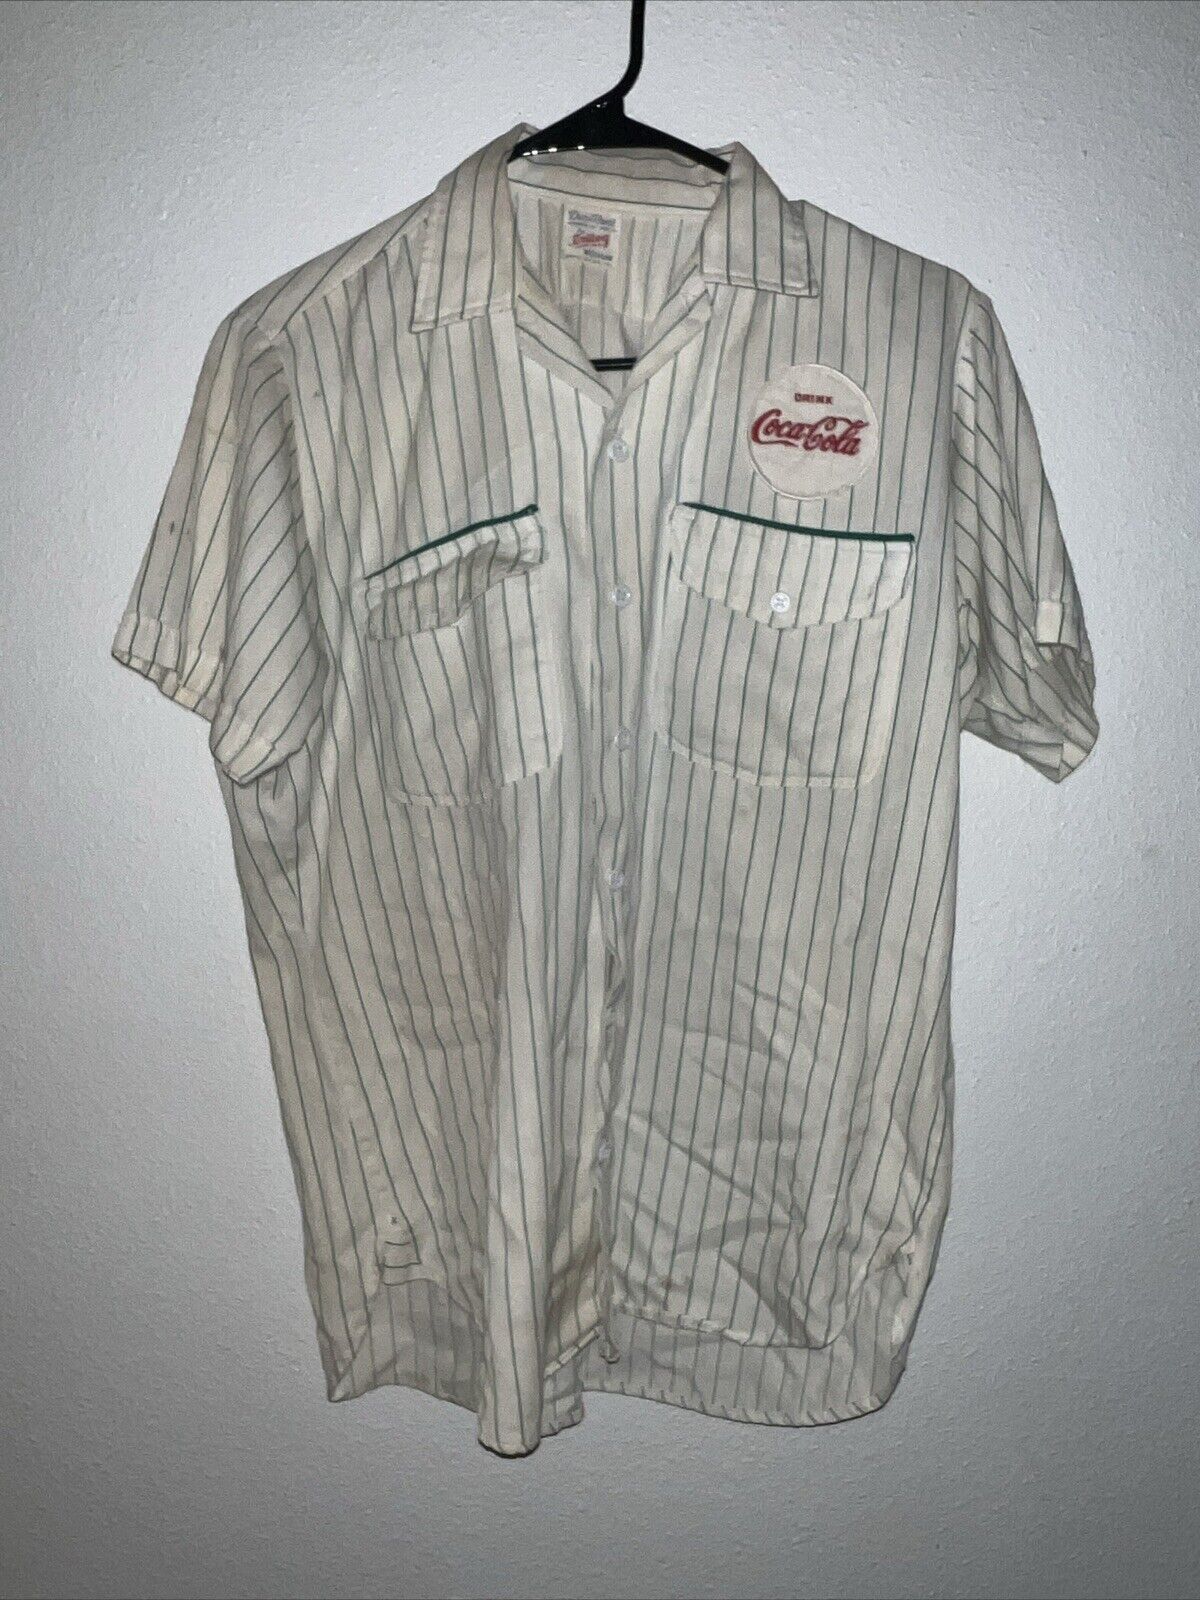 vintage coca cola shirt 1940s 1950s Work shirt